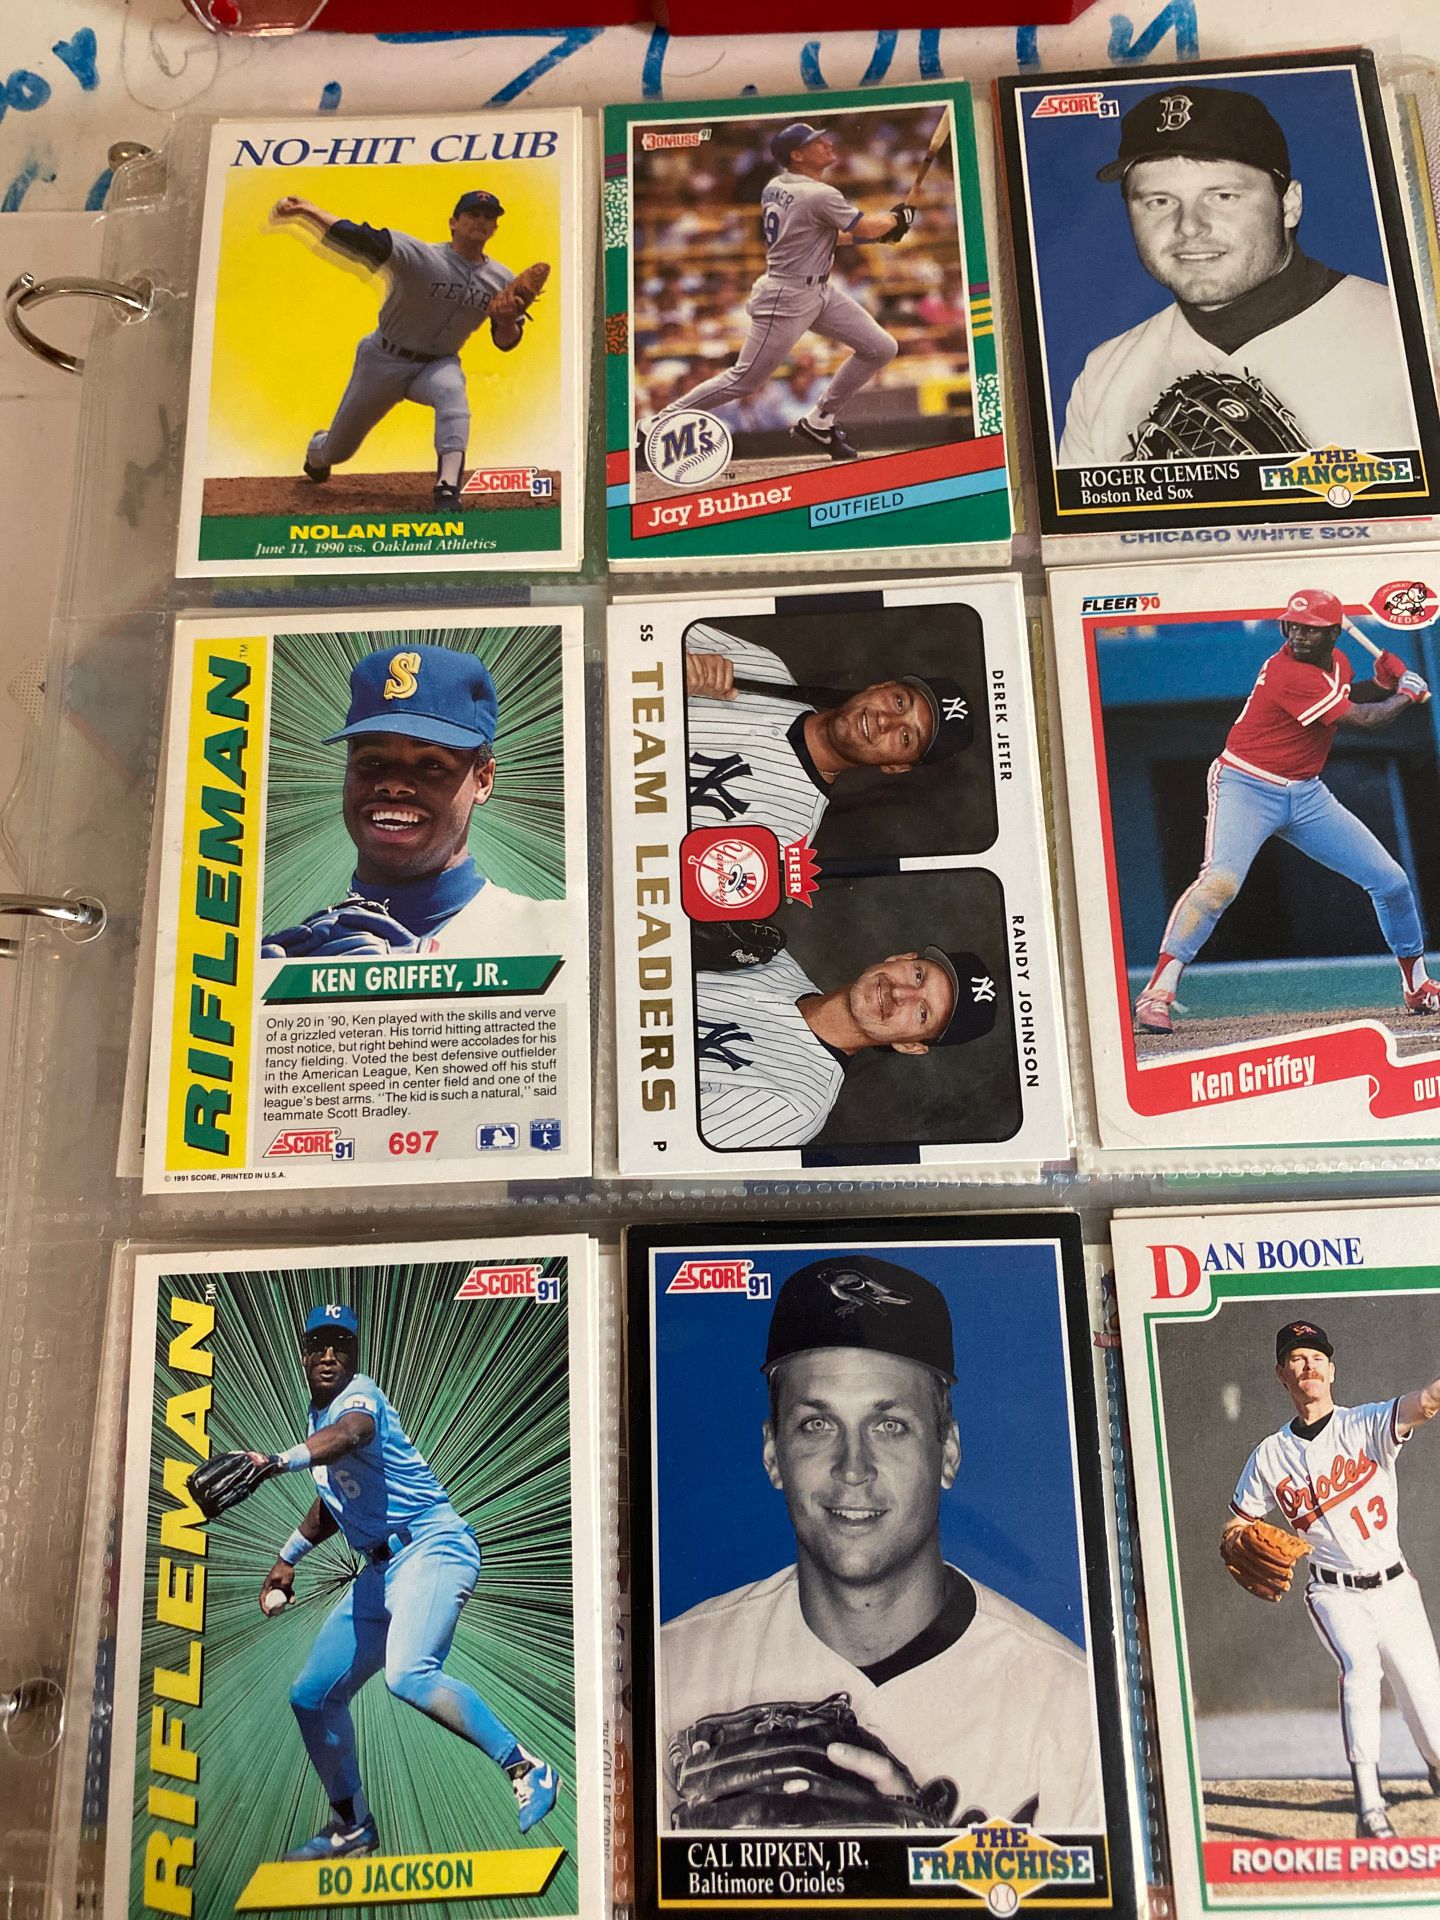 Whole bunch of 1991 baseball cards with Nolan Ryan, Bo Jackson, Griffey jr